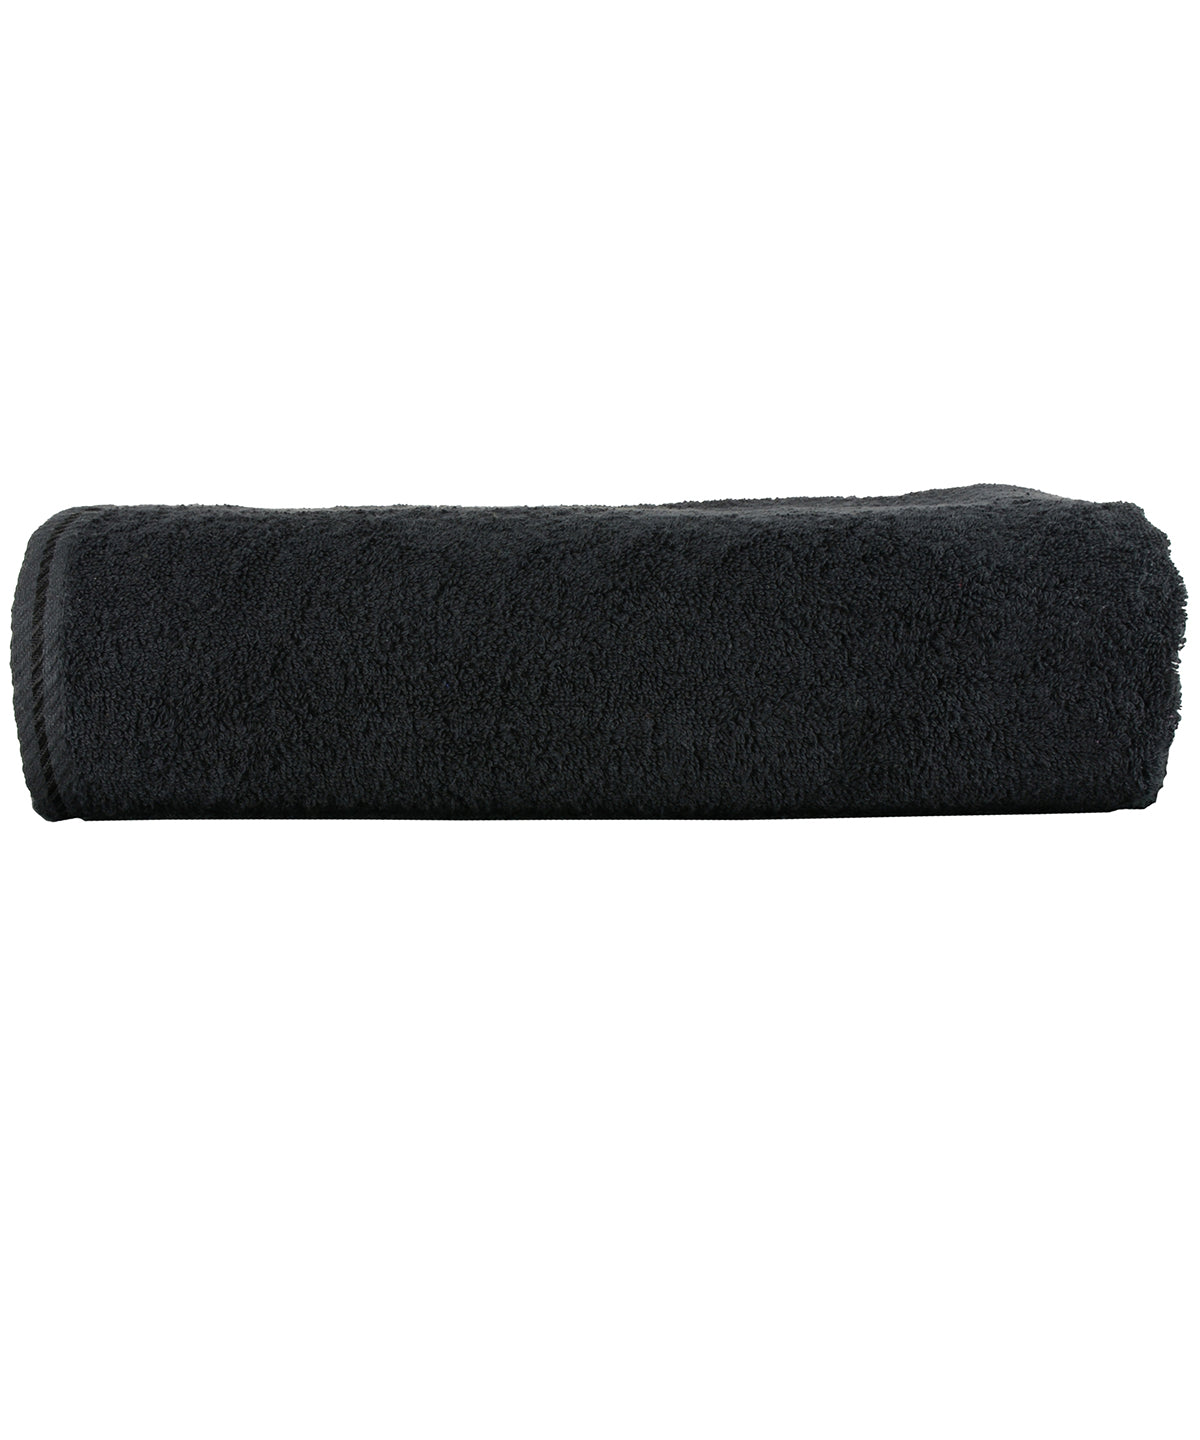 Personalised Towels - Black A&R Towels ARTG® Big towel